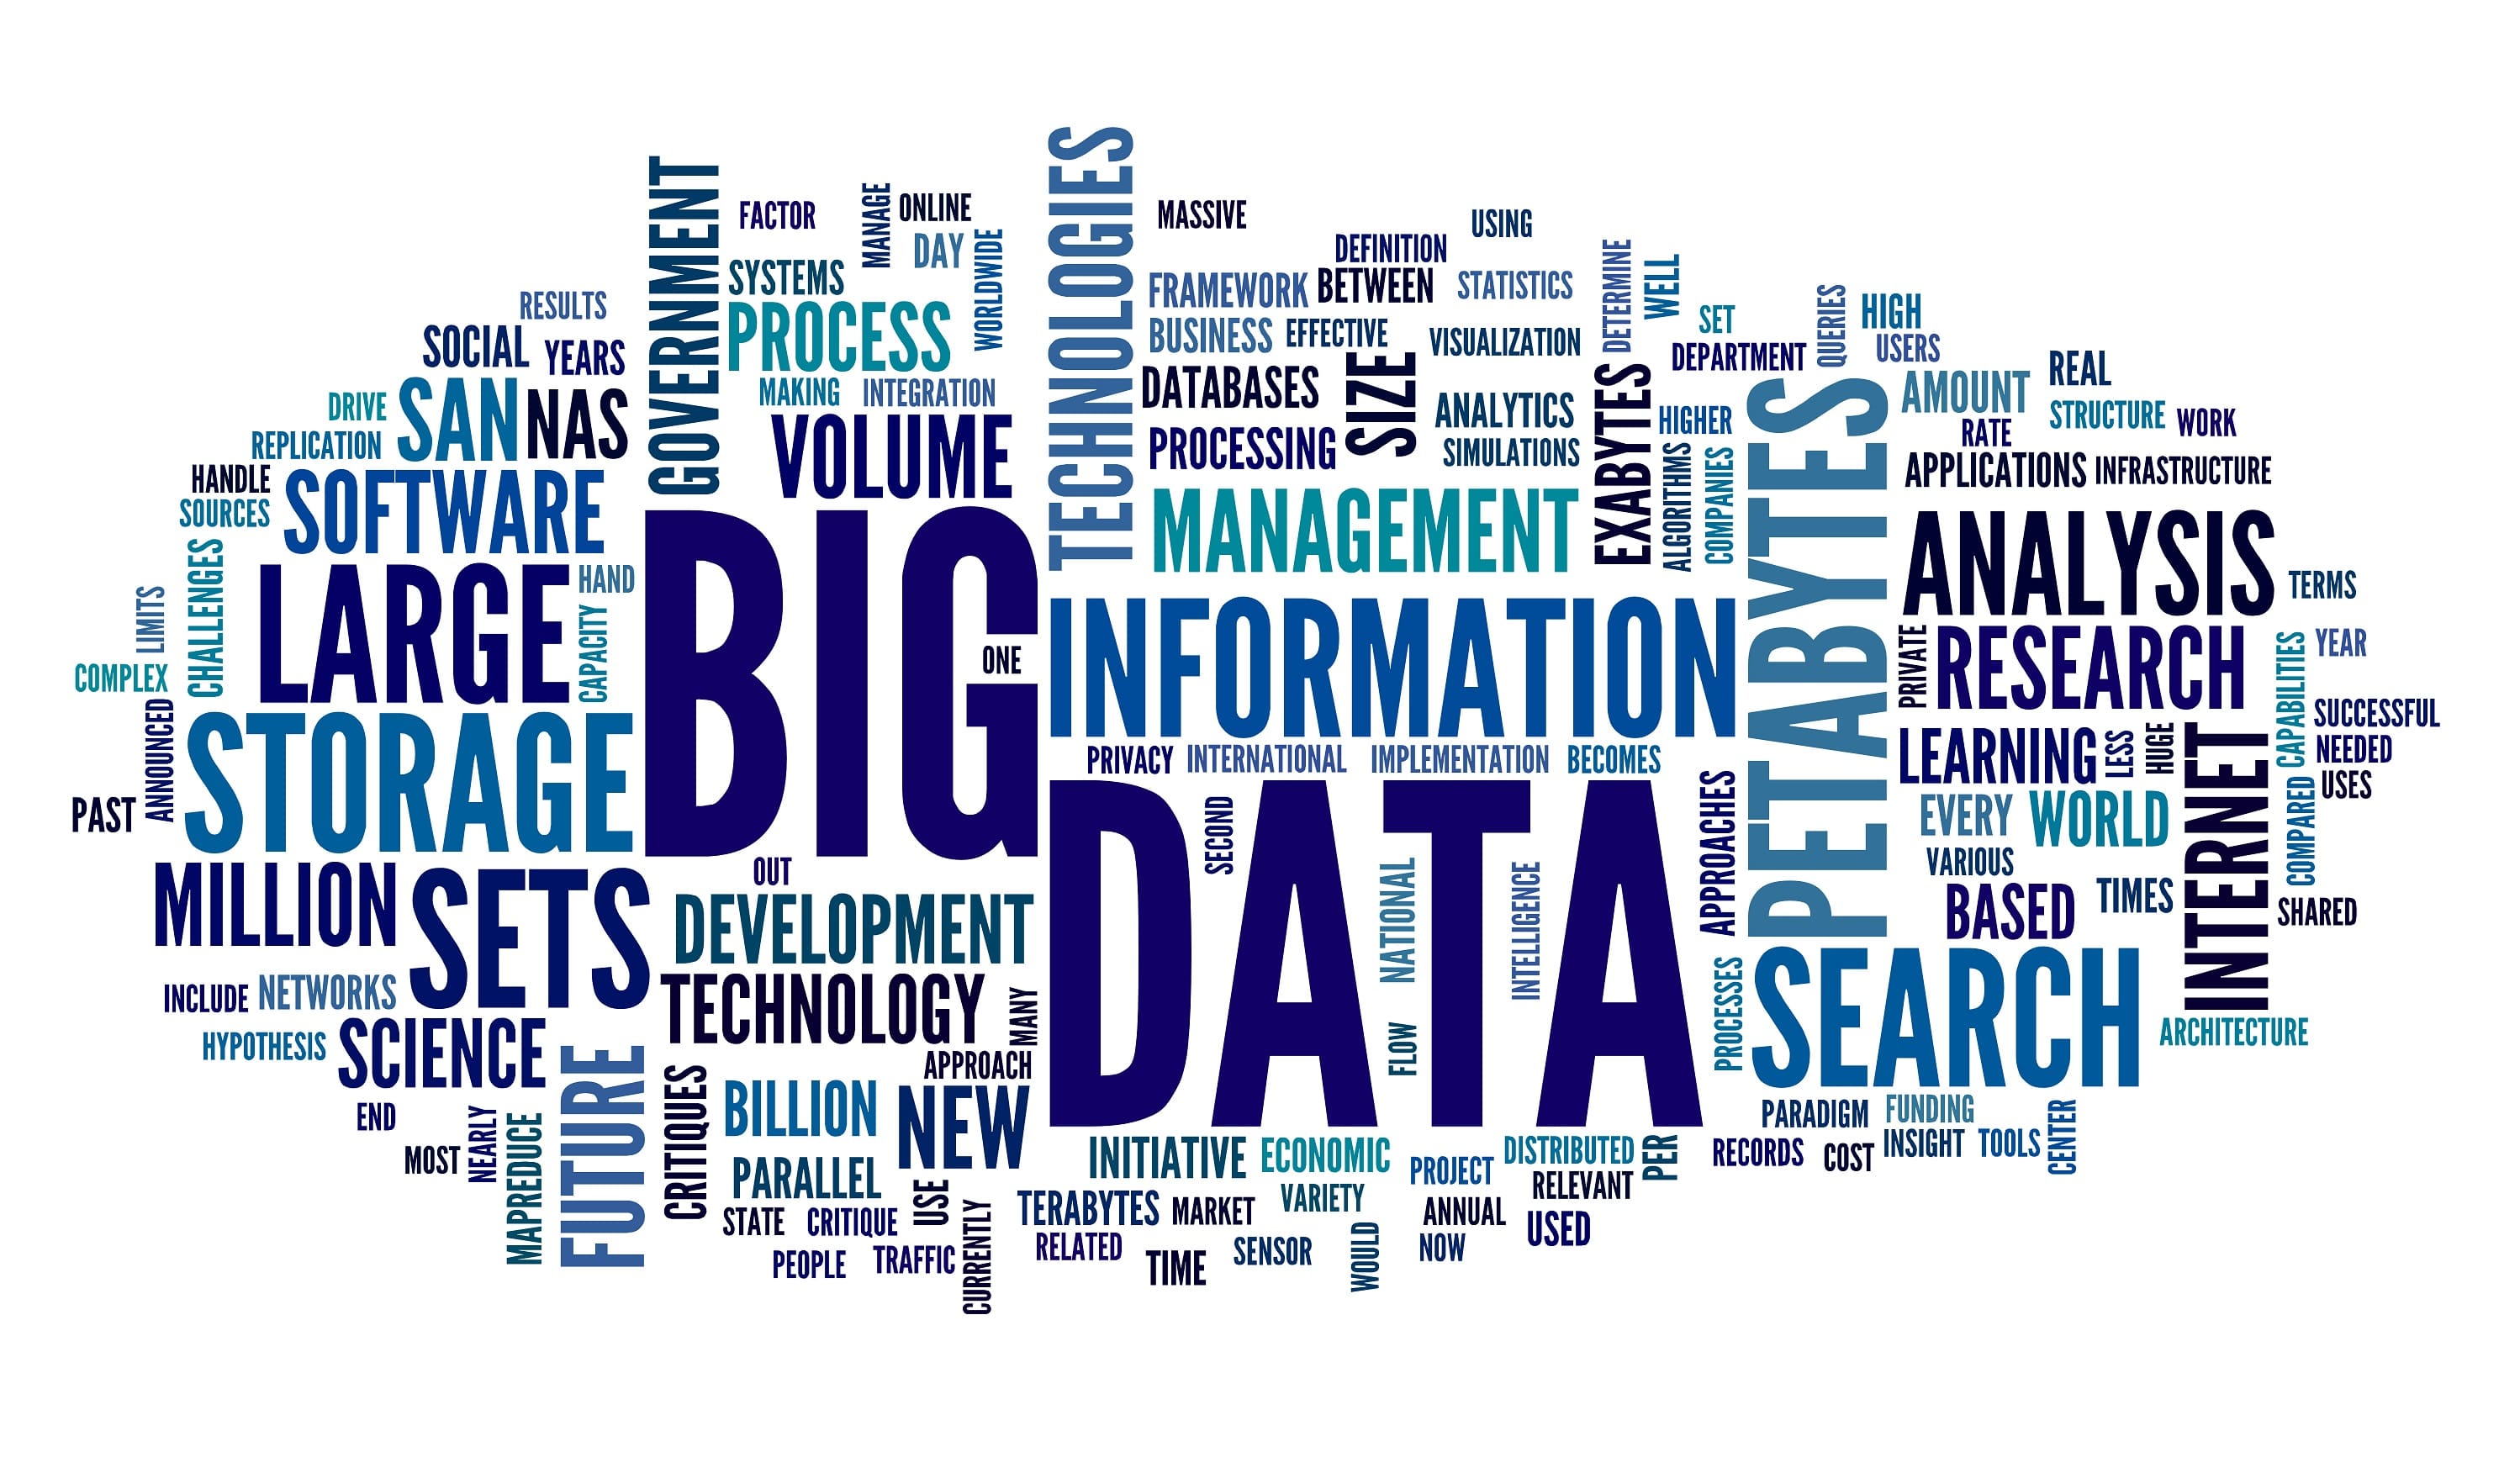 8 big trends in big data analytics - PreparationInfo